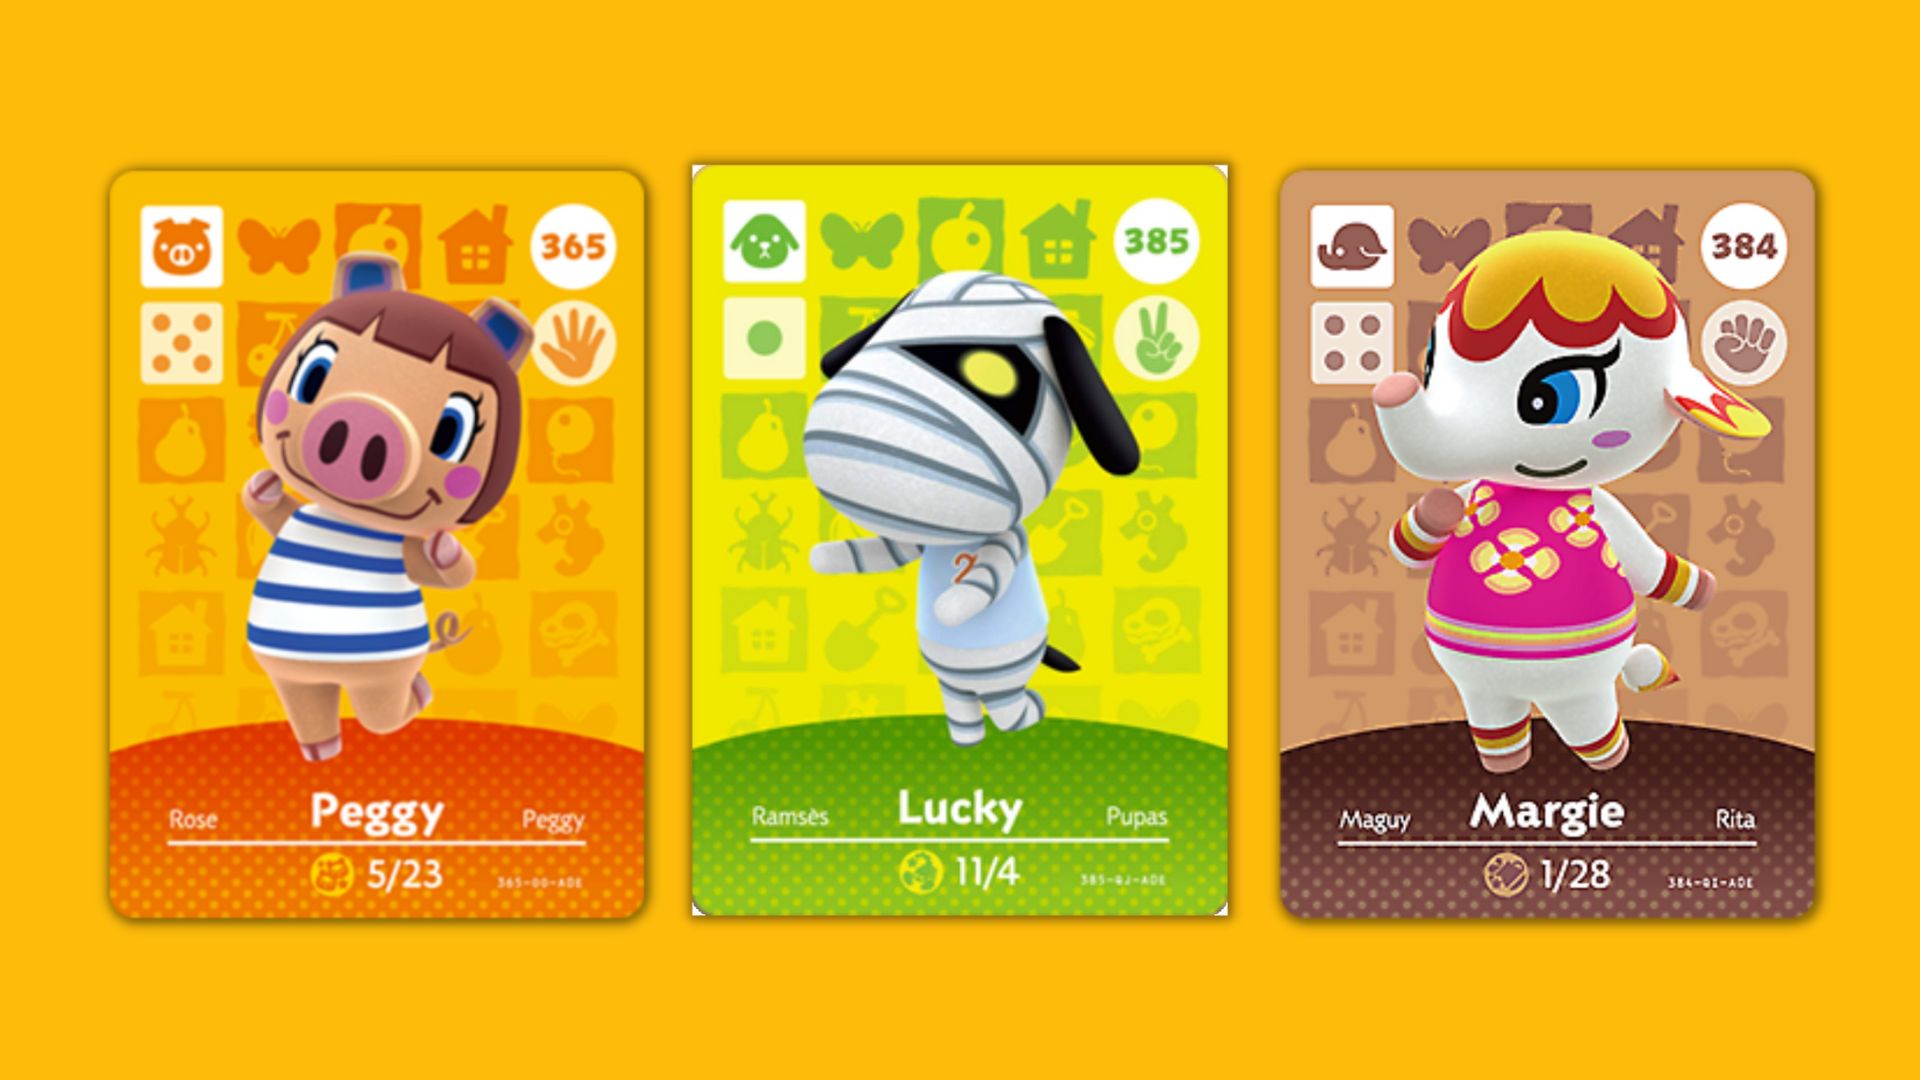 Every Animal Crossing amiibo card